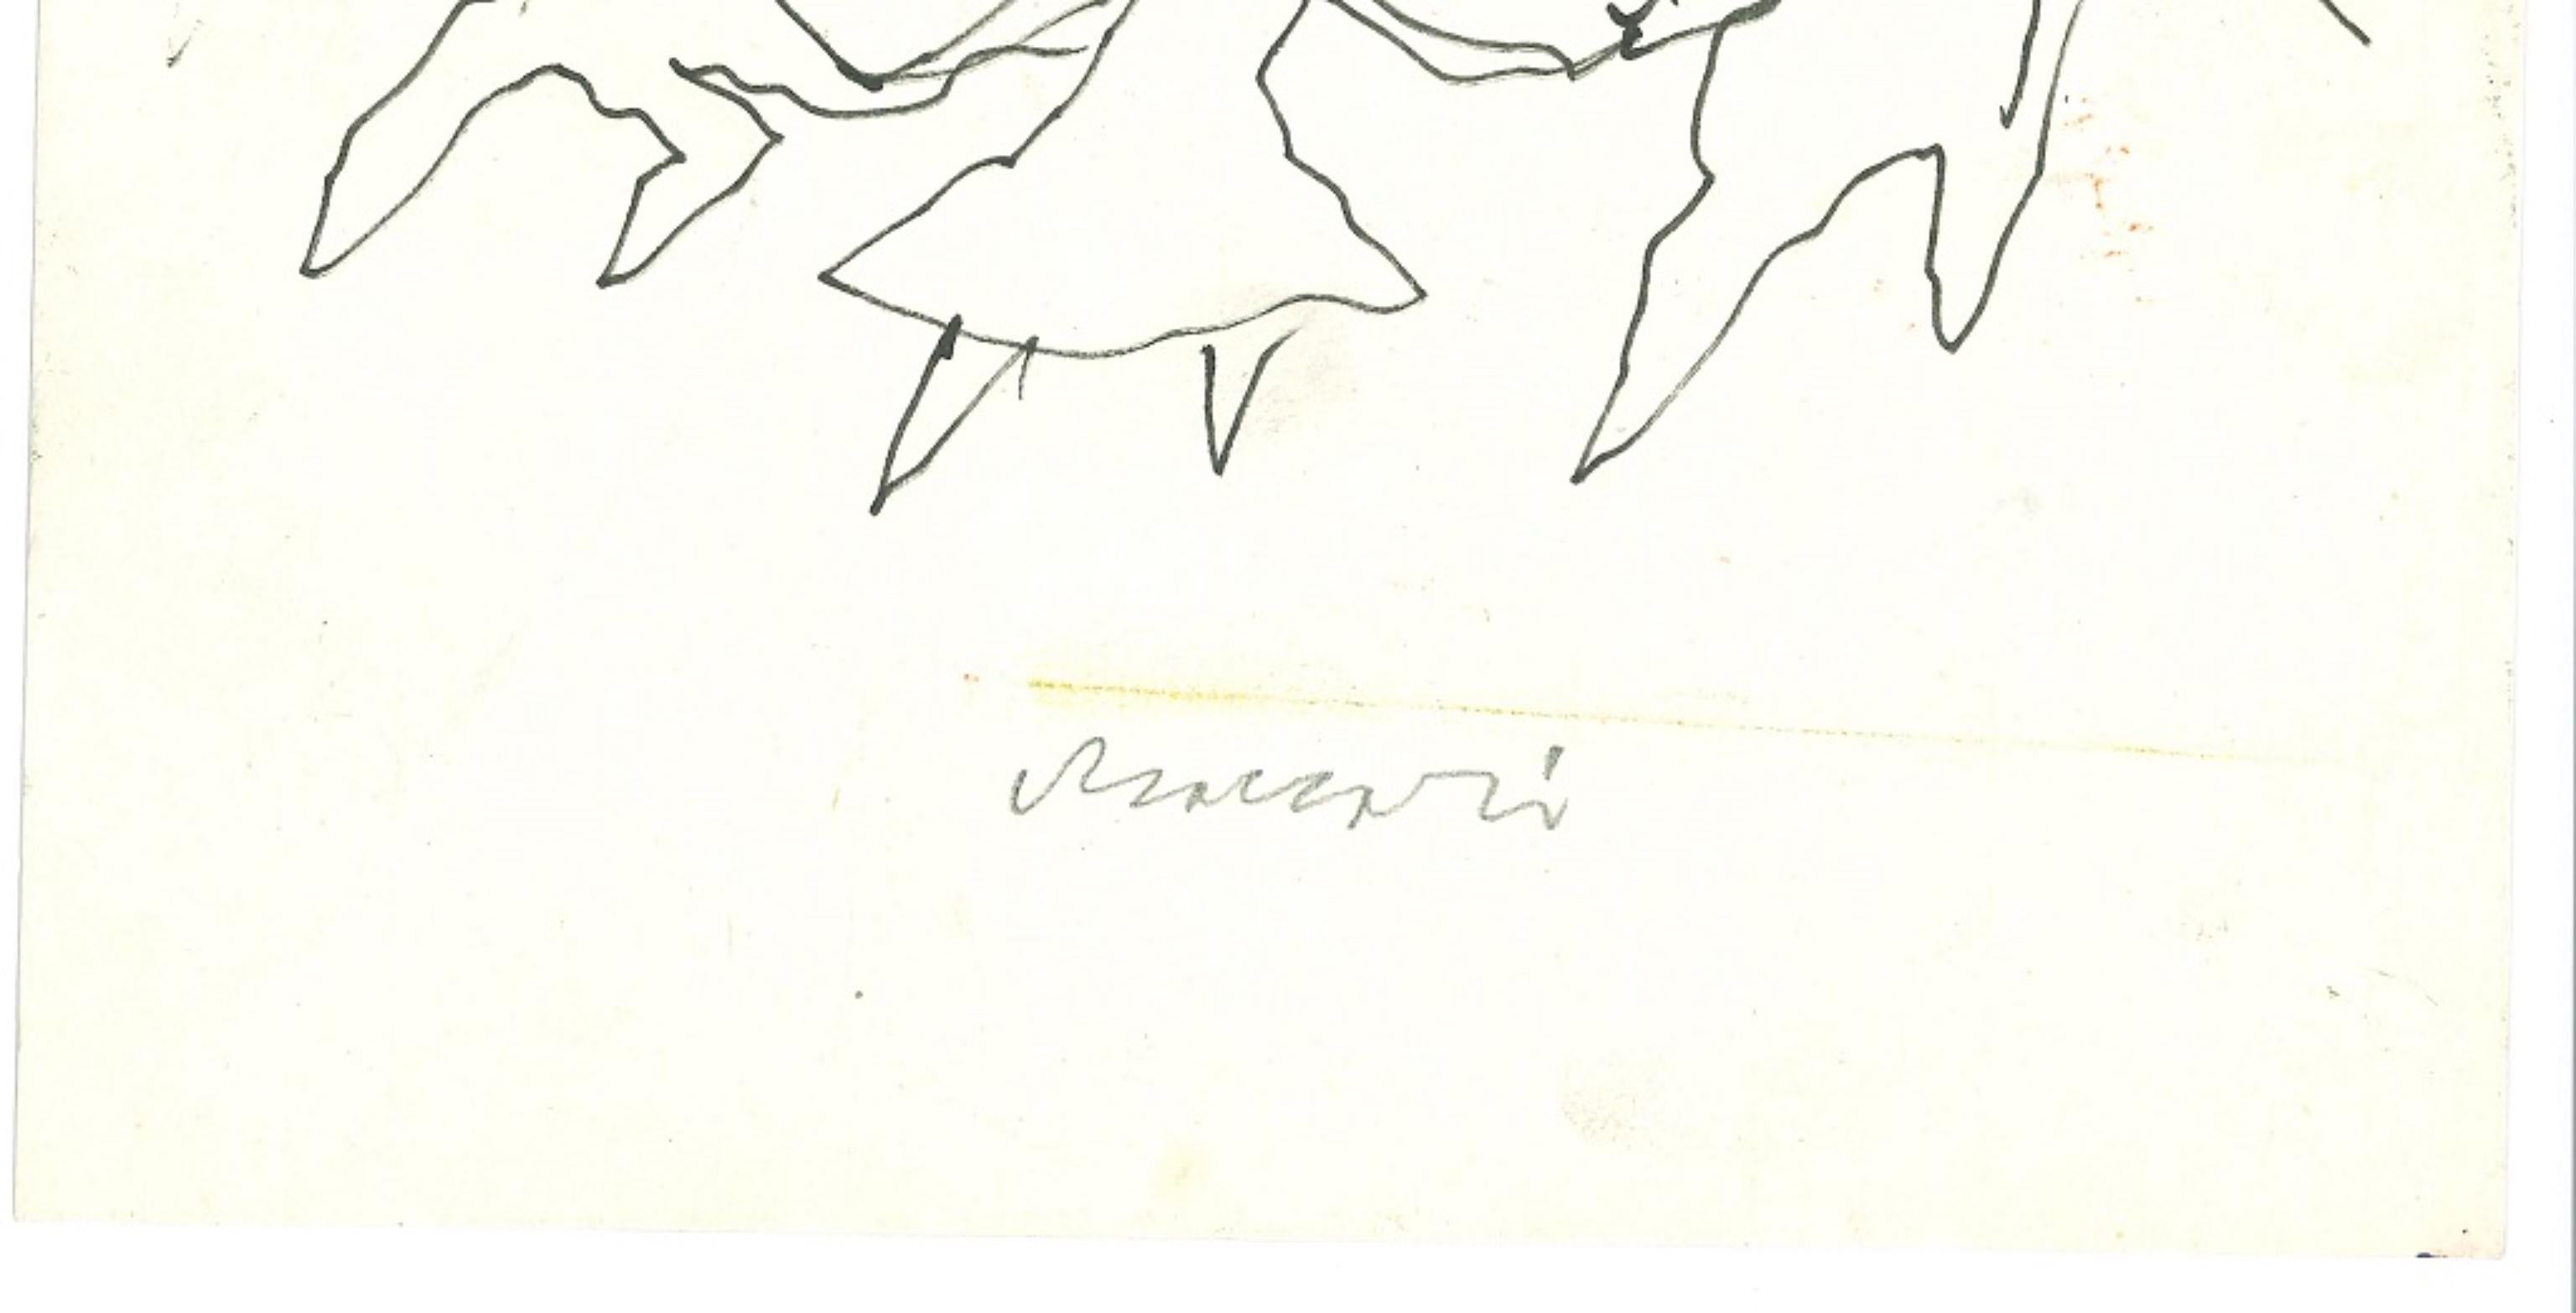 La Danse - Ink Drawing by Mino Maccari - 1960s For Sale 1